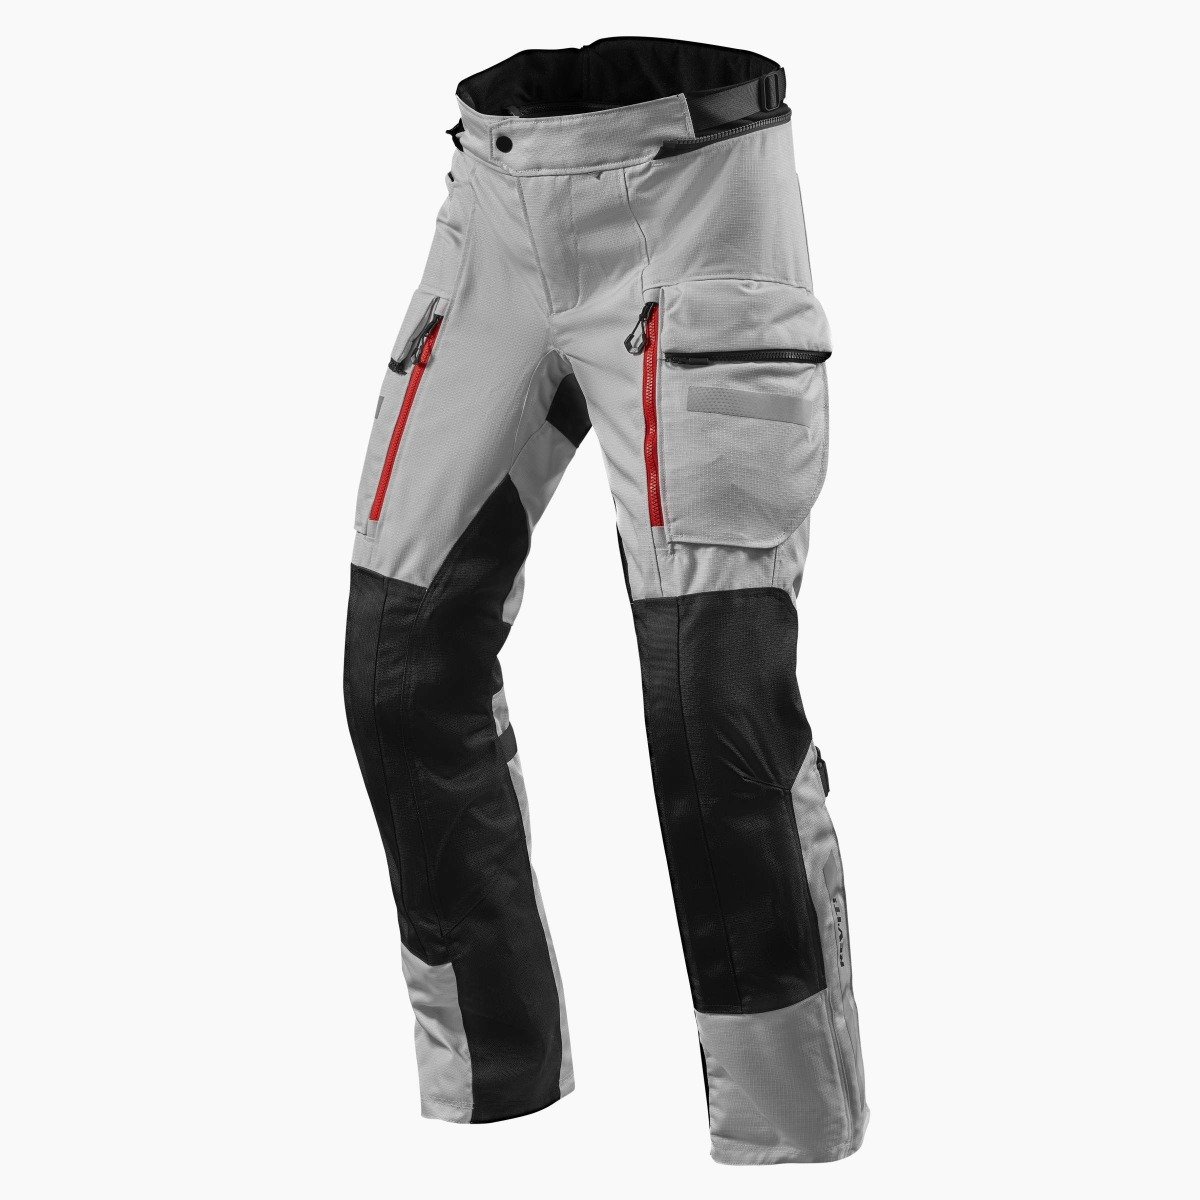 Image of REV'IT! Sand 4 H2O Standard Silver Black Motorcycle Pants Size L EN